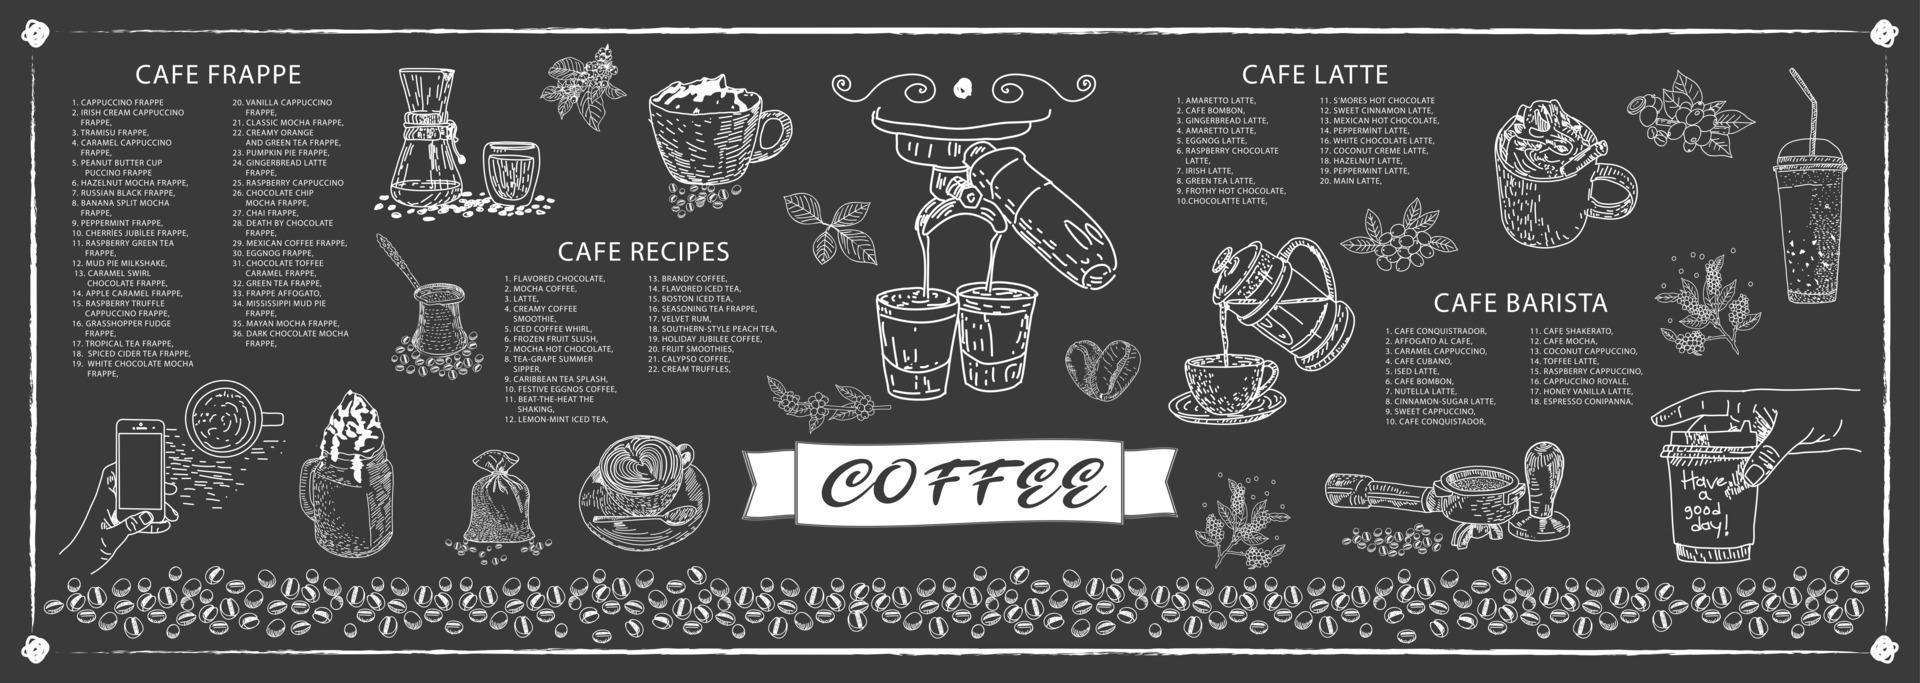 Restaurant cafe menu, template design. vector